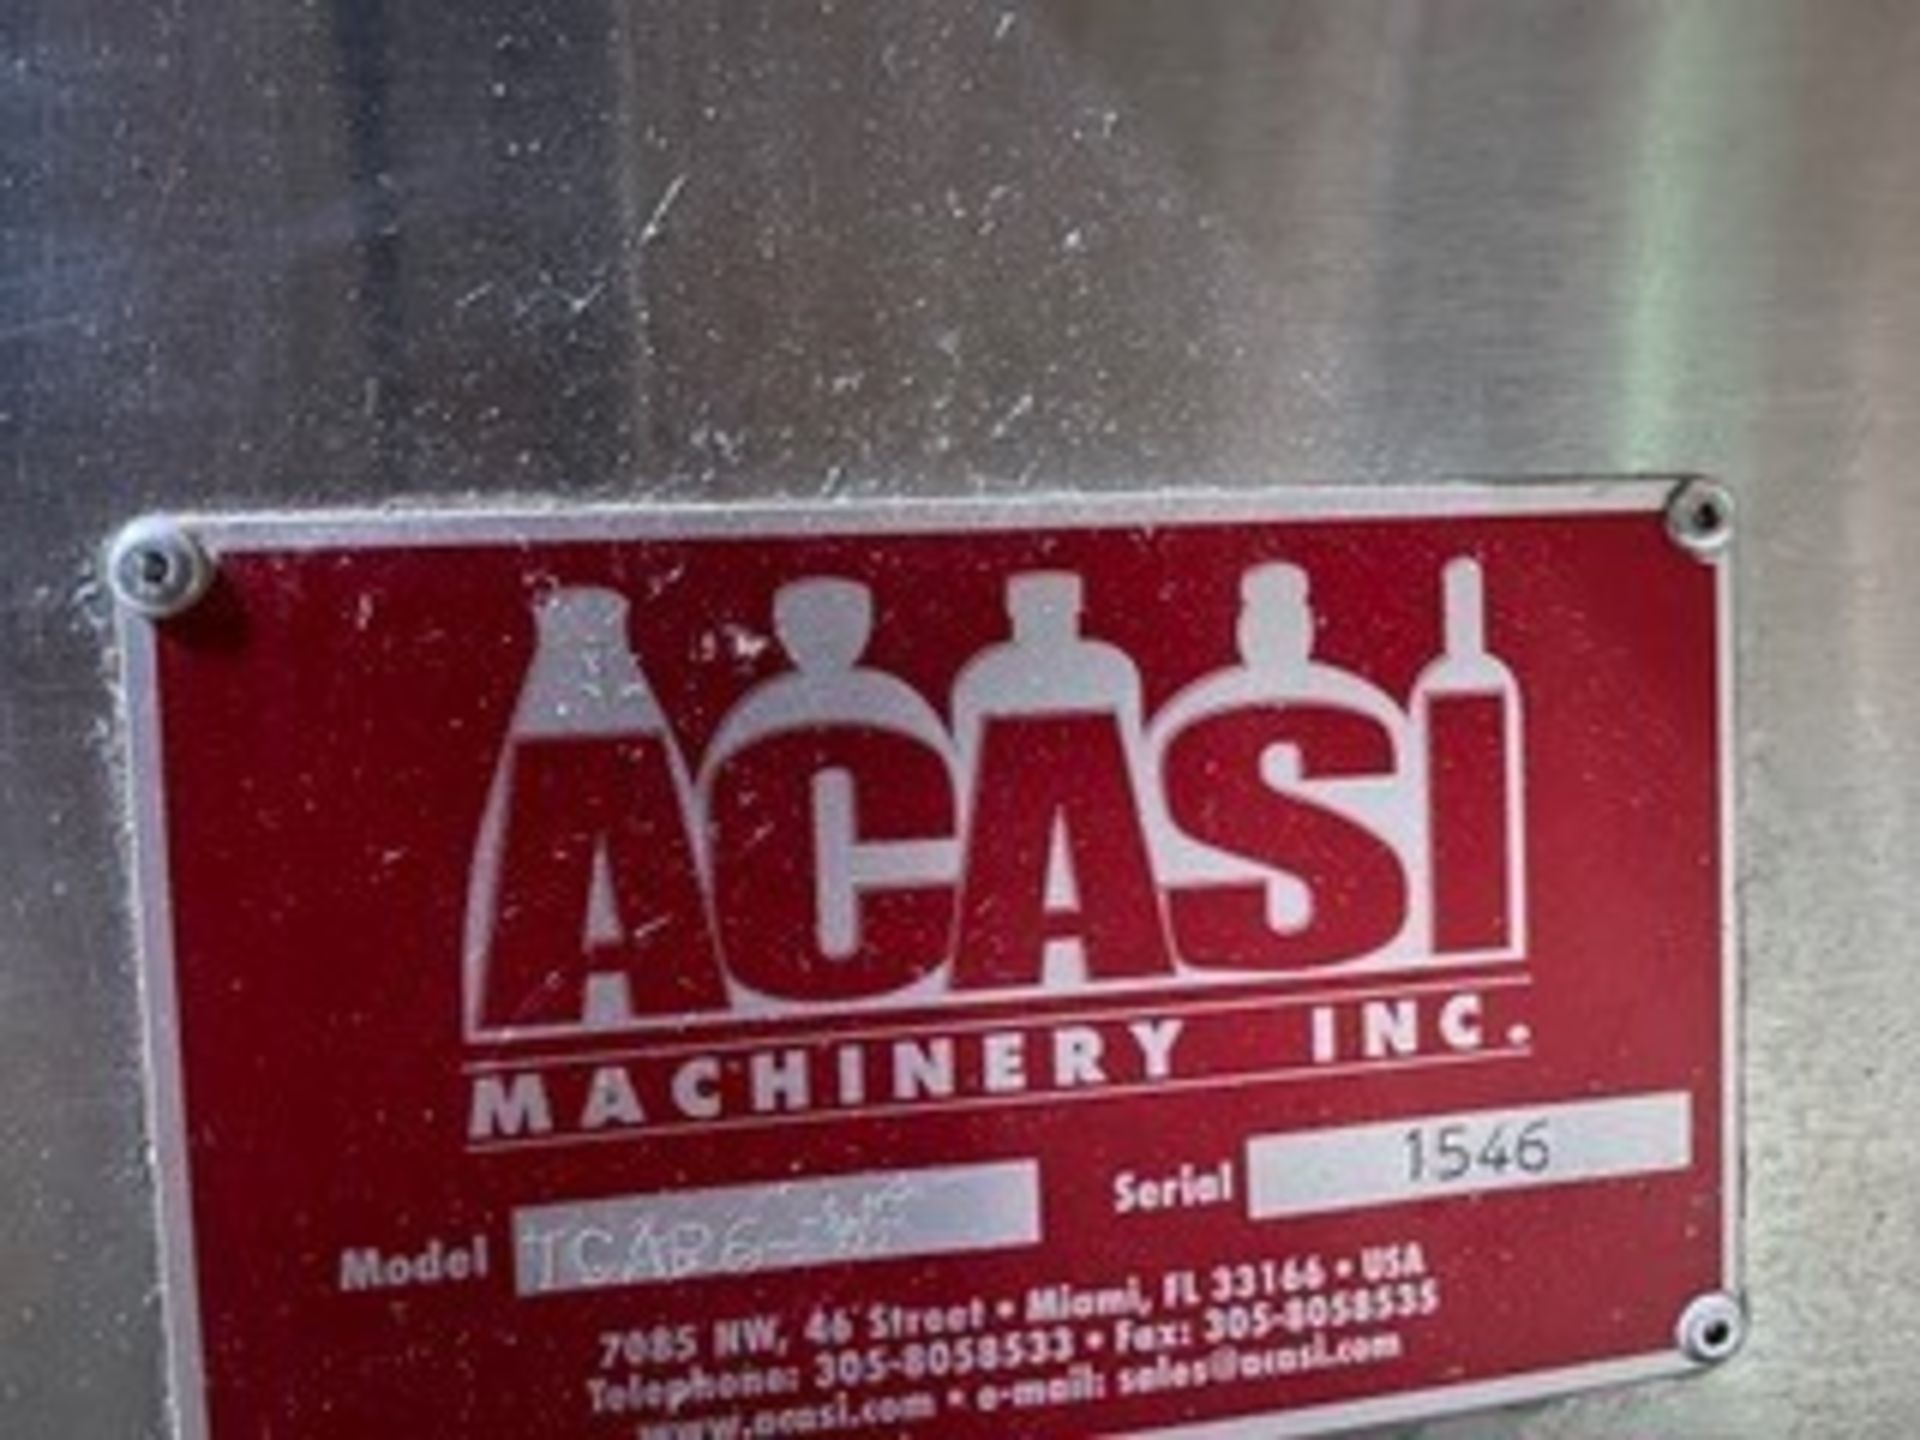 Acasi Model TCAP6-WF, S/N 1546 (includes CLI Unicap-100 WF, S/N 2-33688EC Elevator (Loading Fee $ - Image 3 of 4